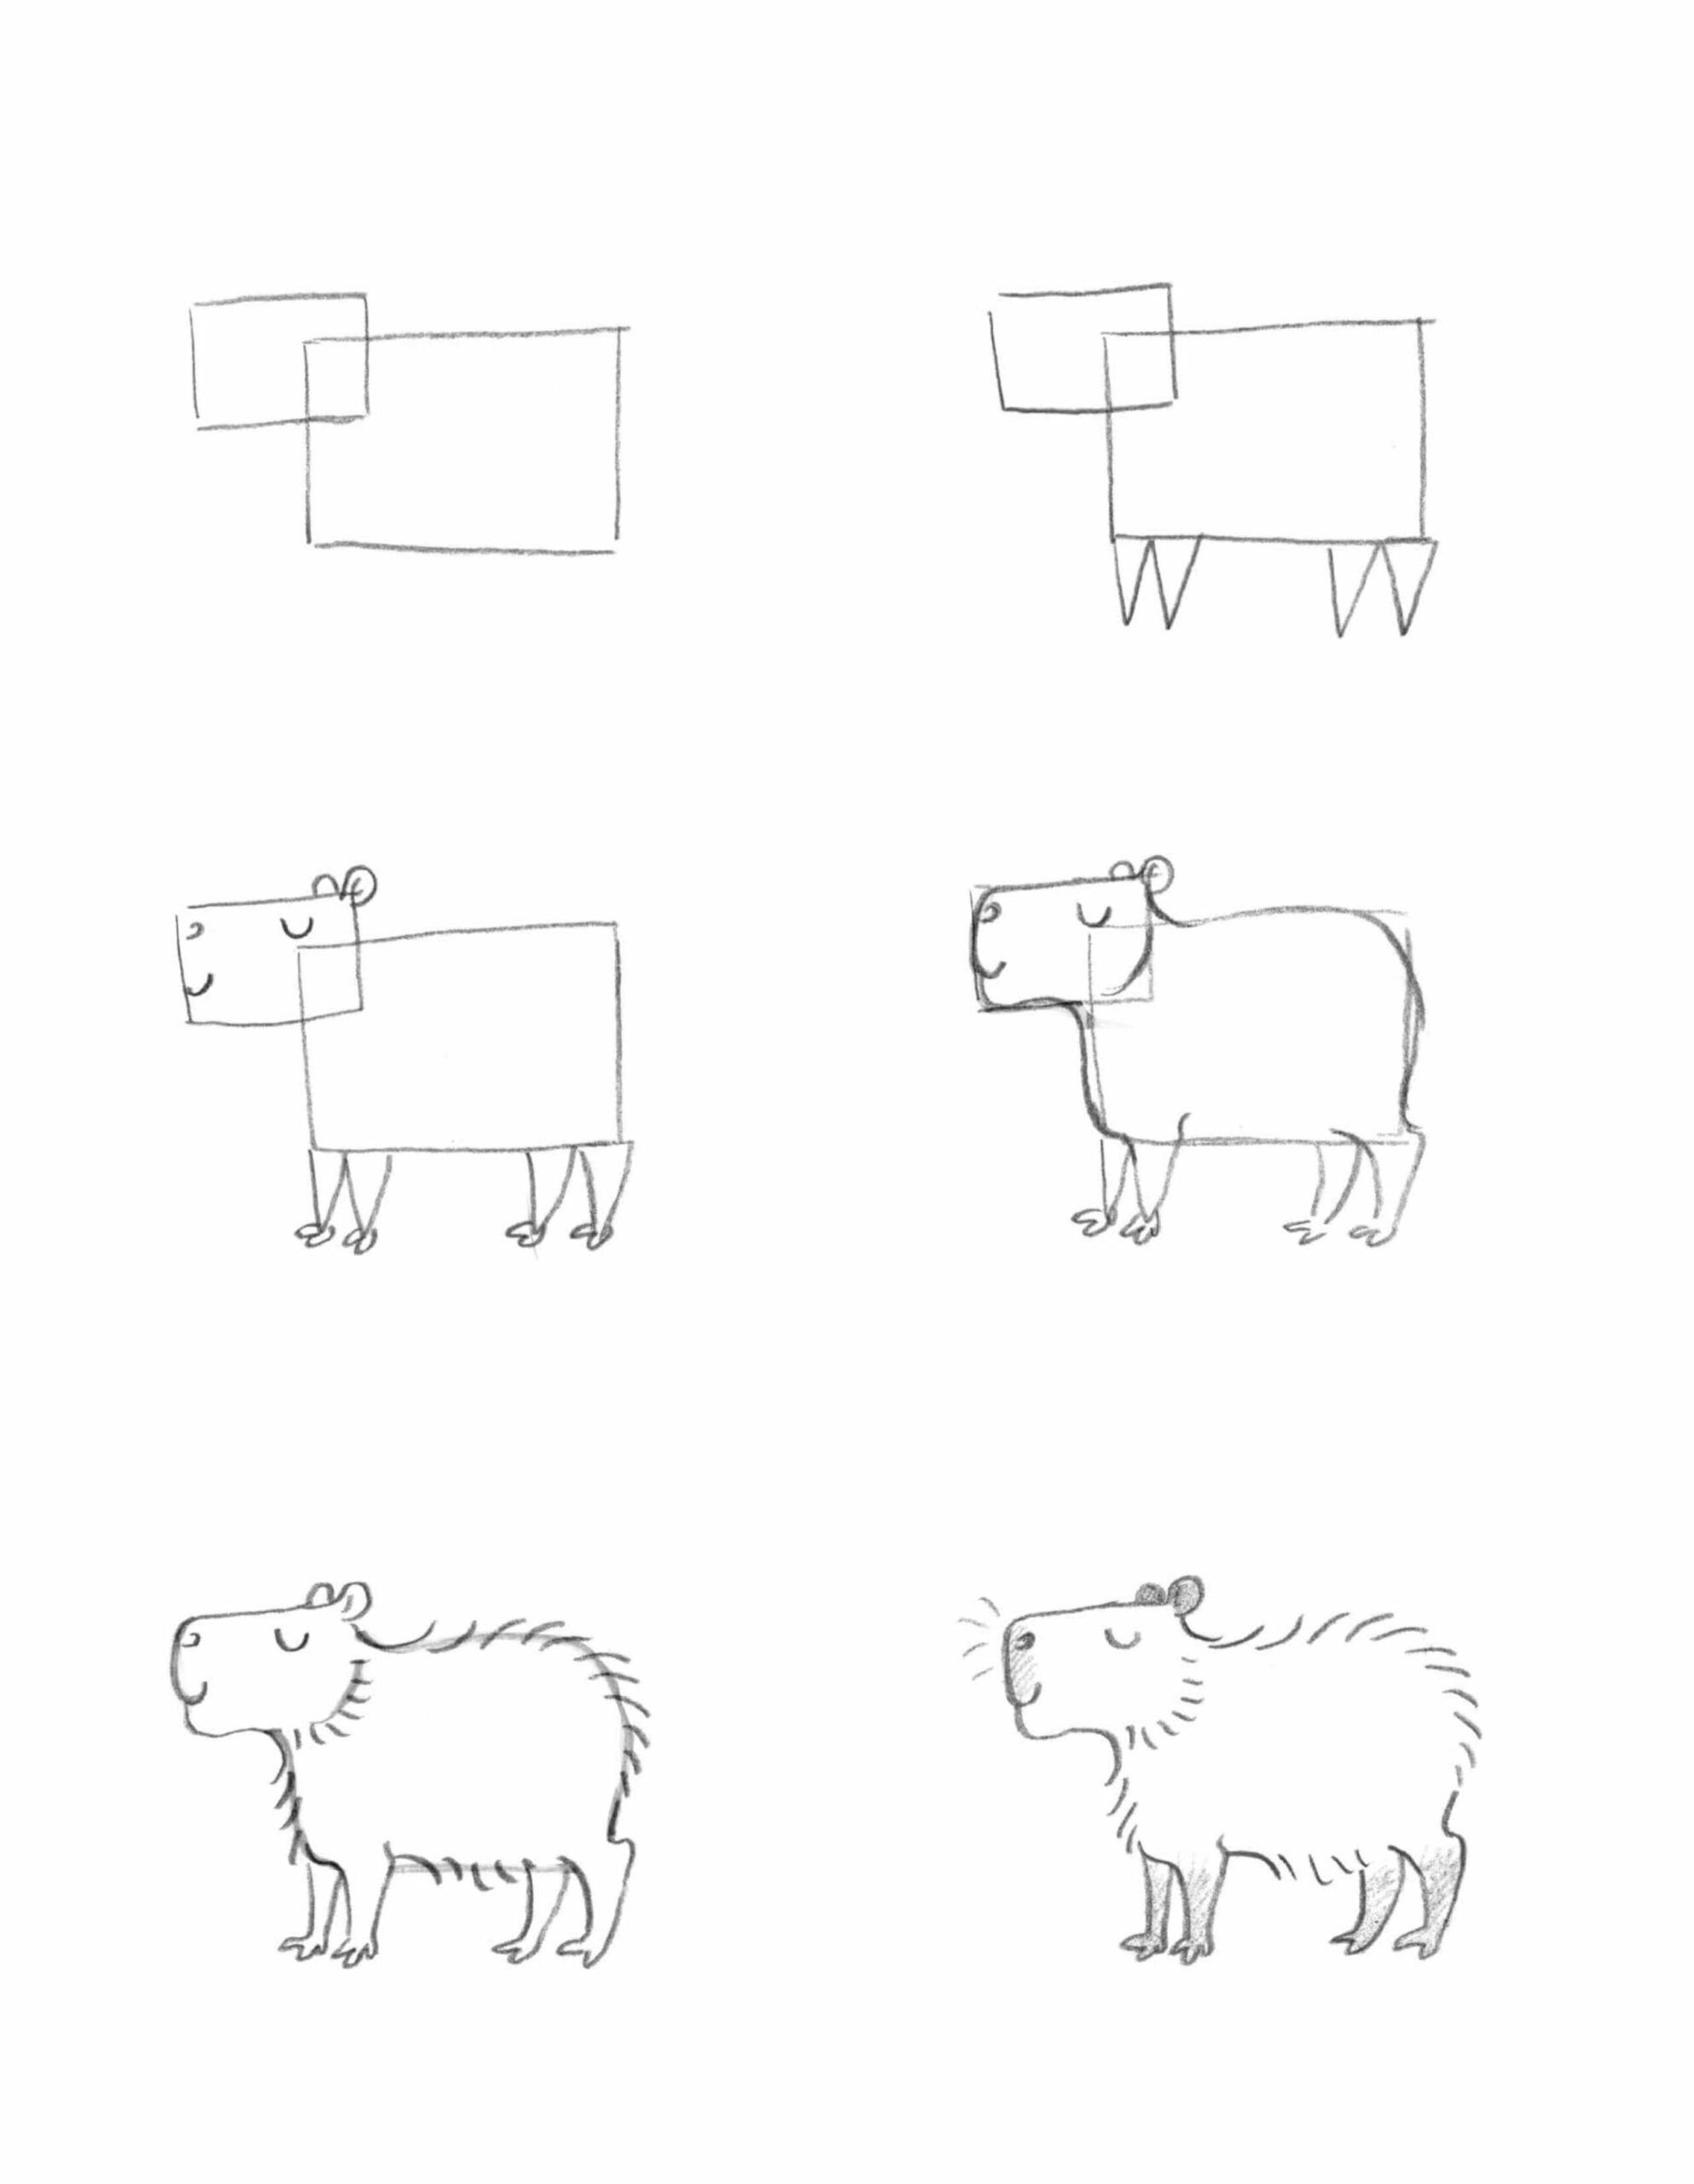 Capybara idea (10) Drawing Ideas